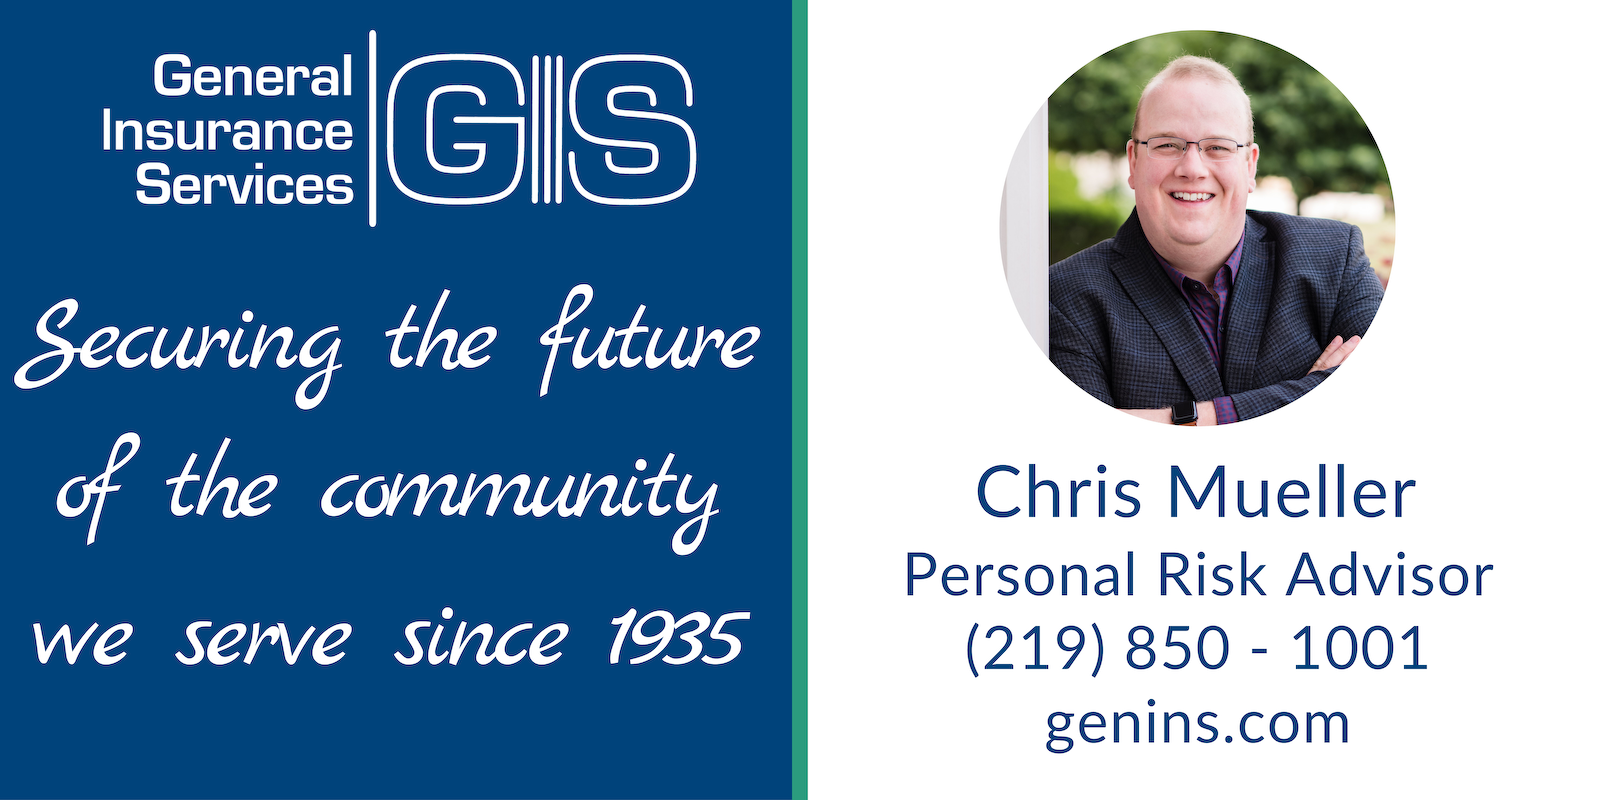 General Insurance Services - Chris Mueller